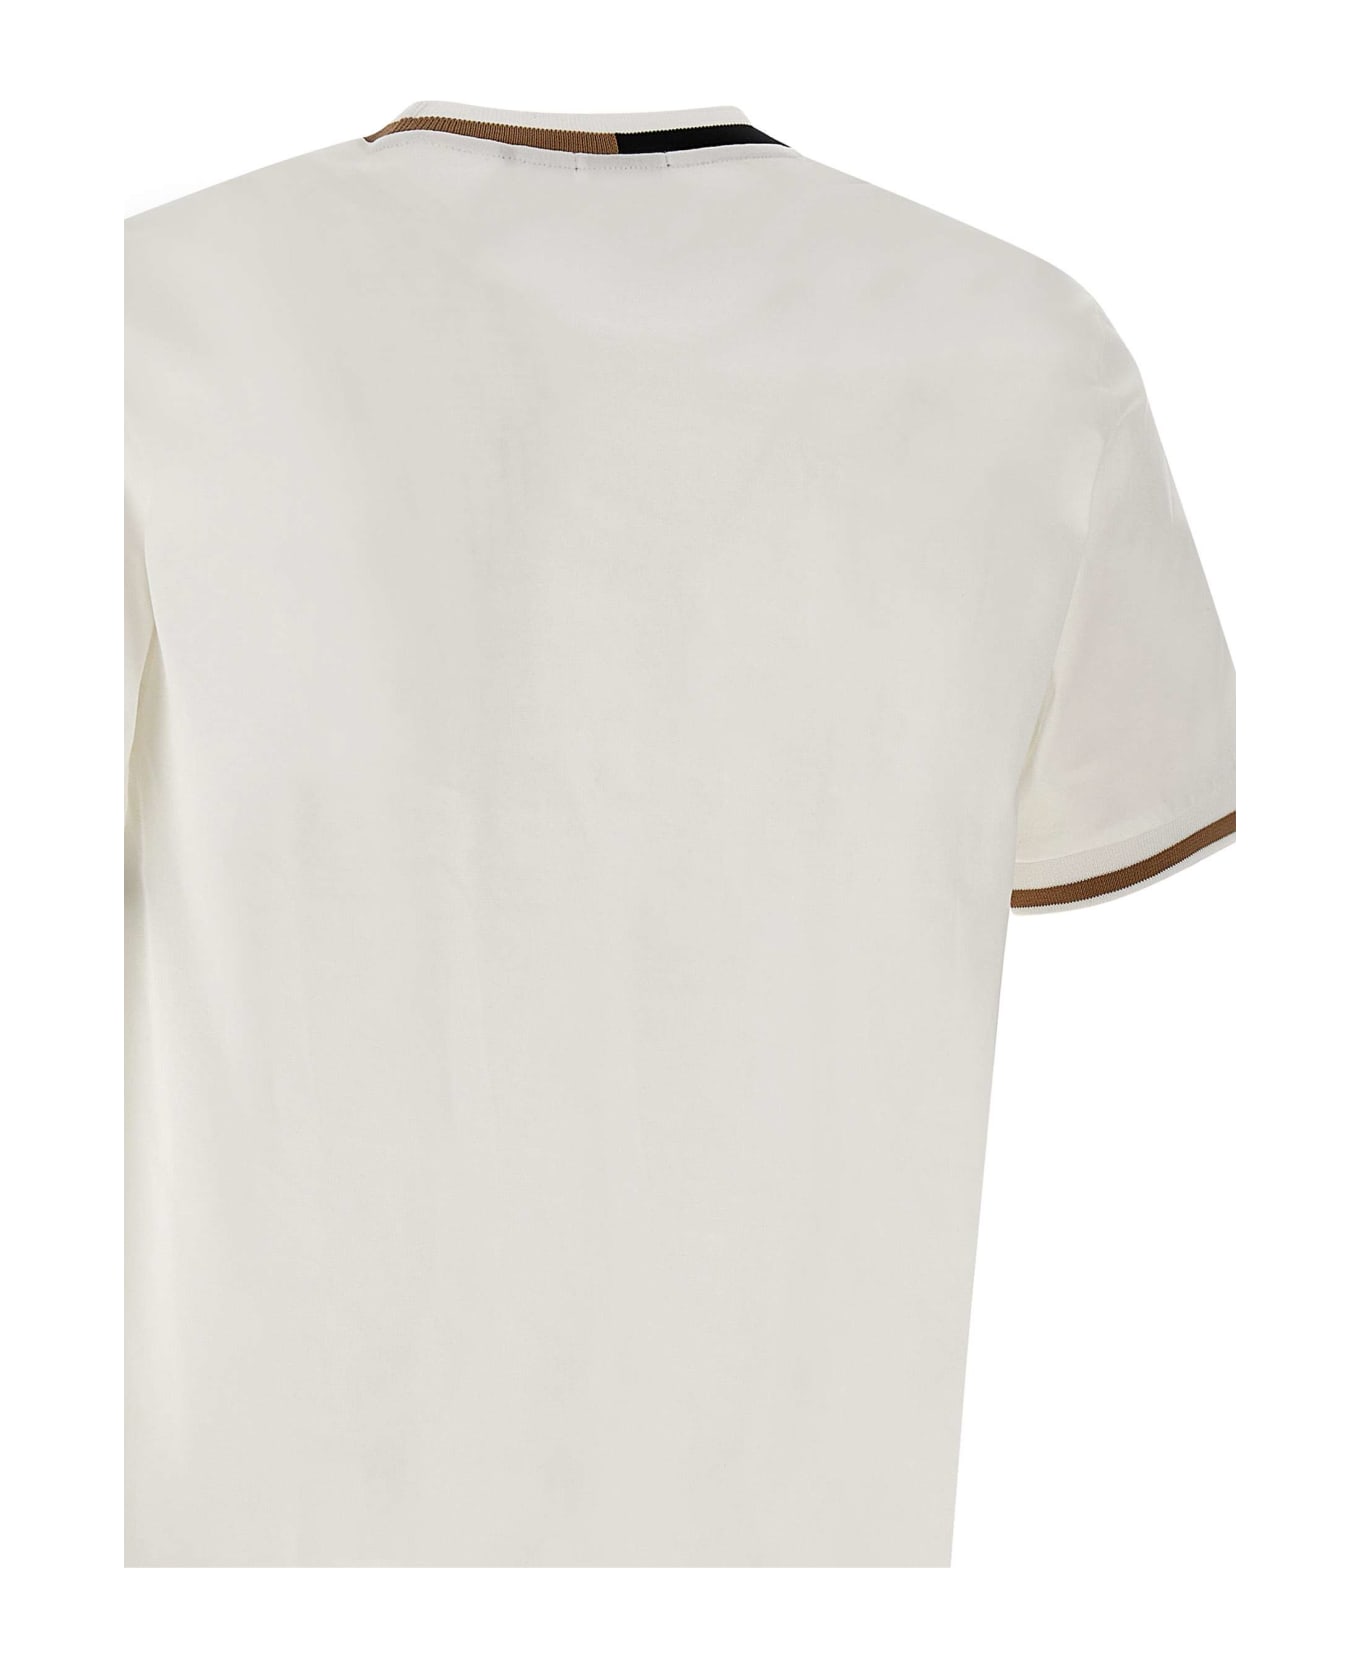 Hugo Boss "thompson" Mercerized Cotton T-shirt - WHITE